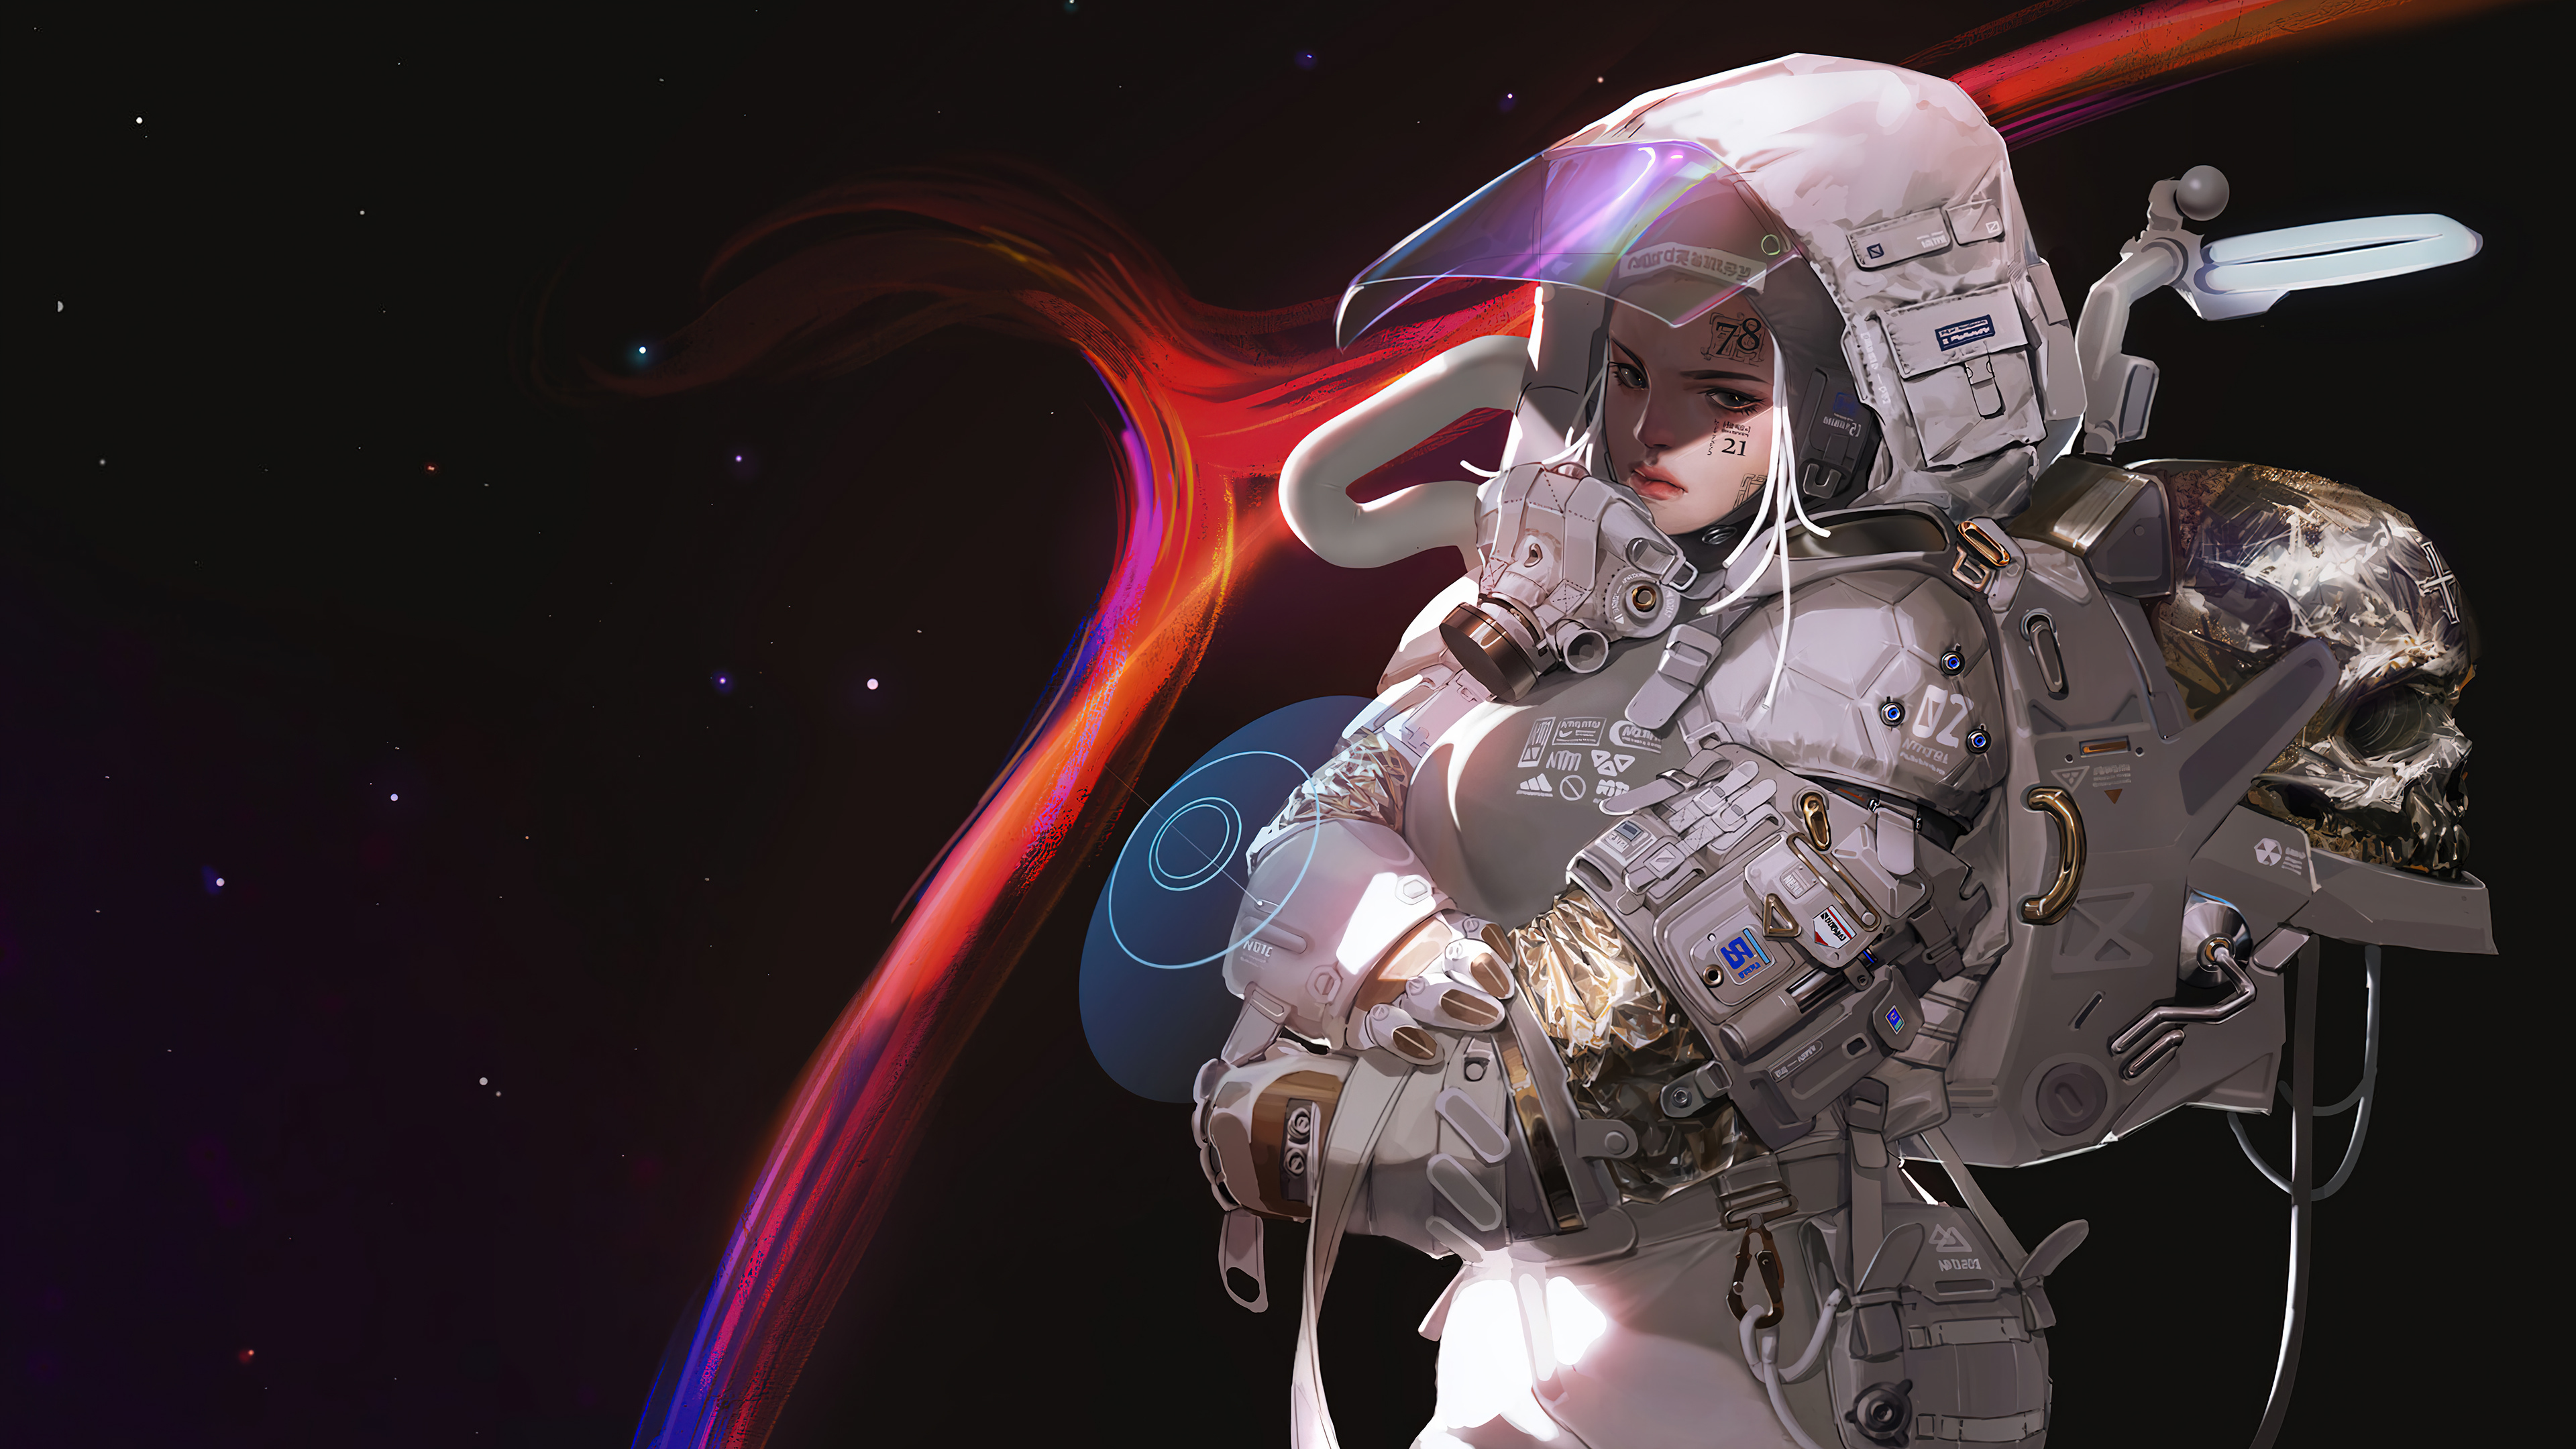 Astronaut Art 4K Wallpaper HD Artist 4K Wallpapers Images and Background   Wallpapers Den